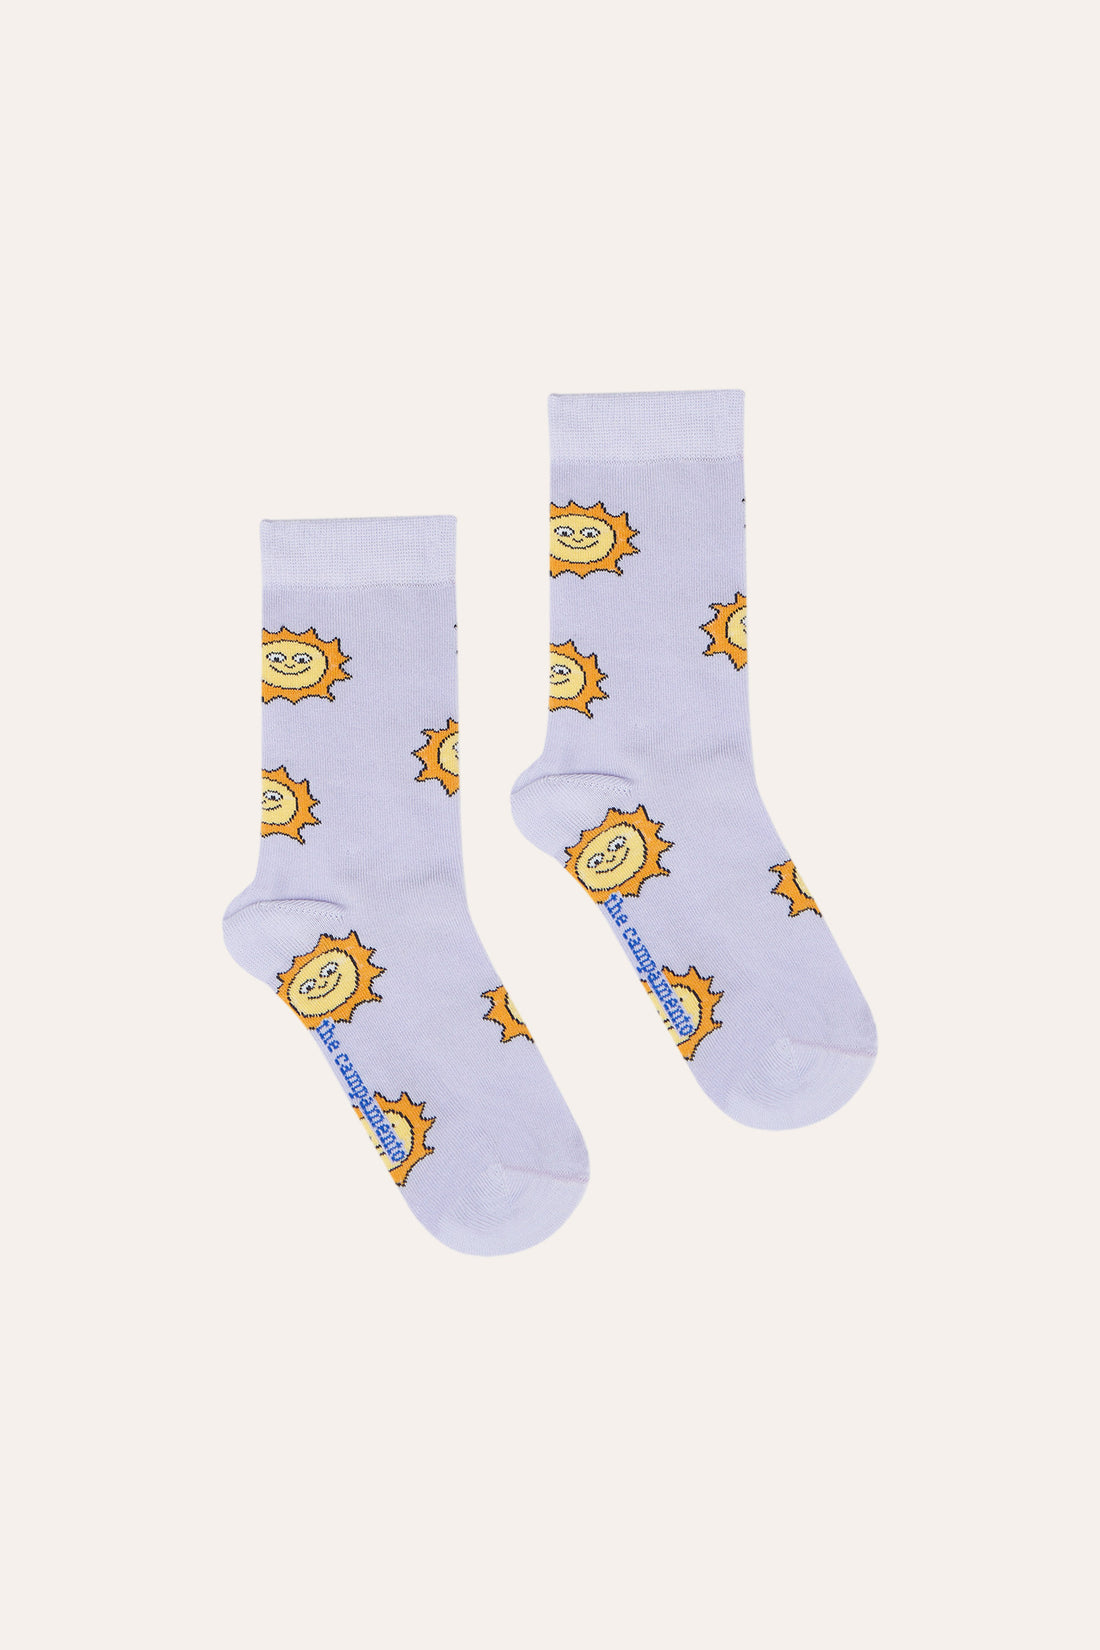 Suns All Over Kids Socks - Parkette.